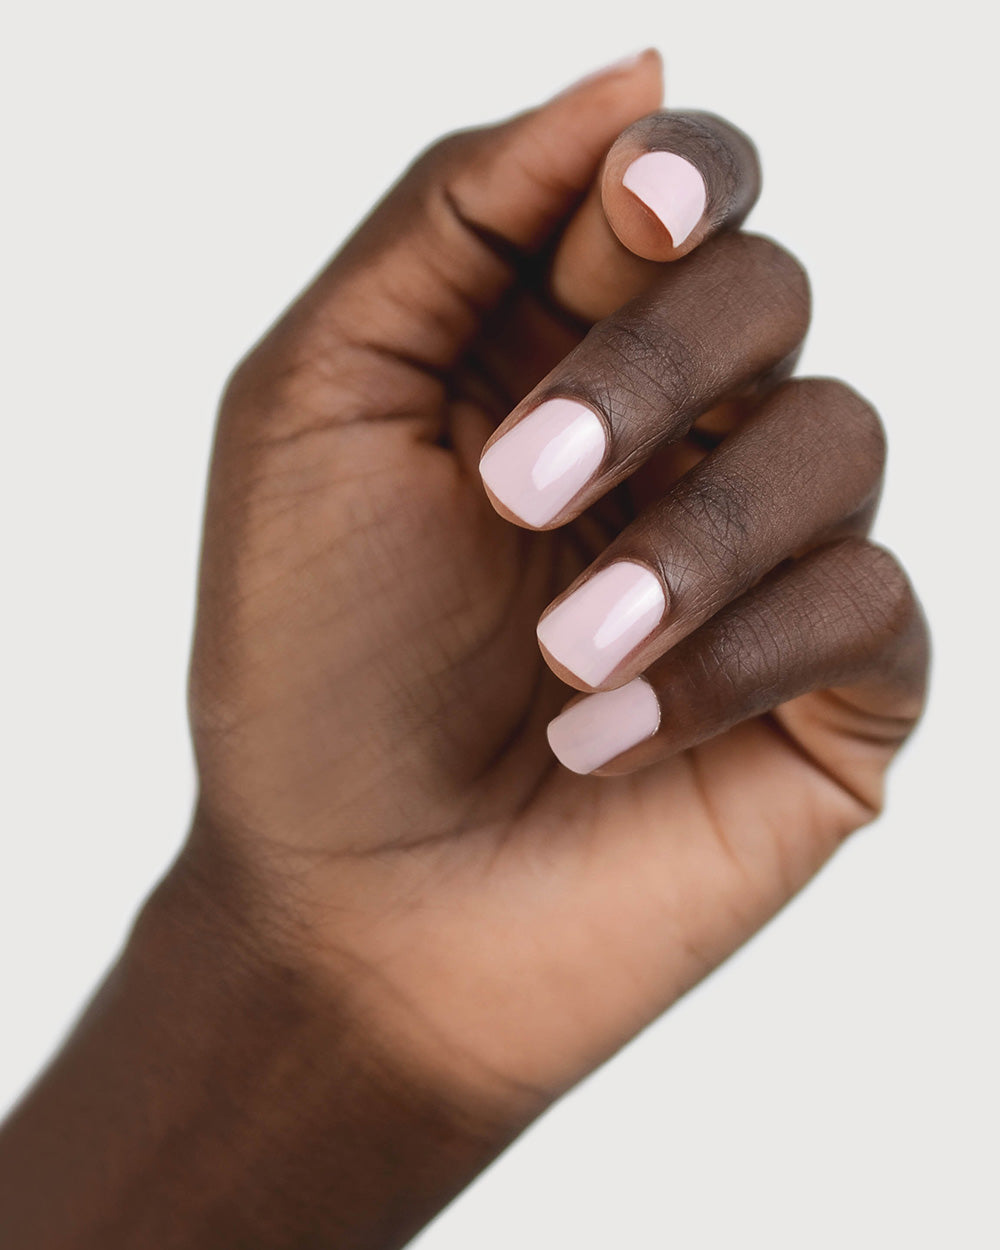 Tranquility Light Mauve Rose Crème nail polish by Sienna Byron Bay on dark skin tone hand.